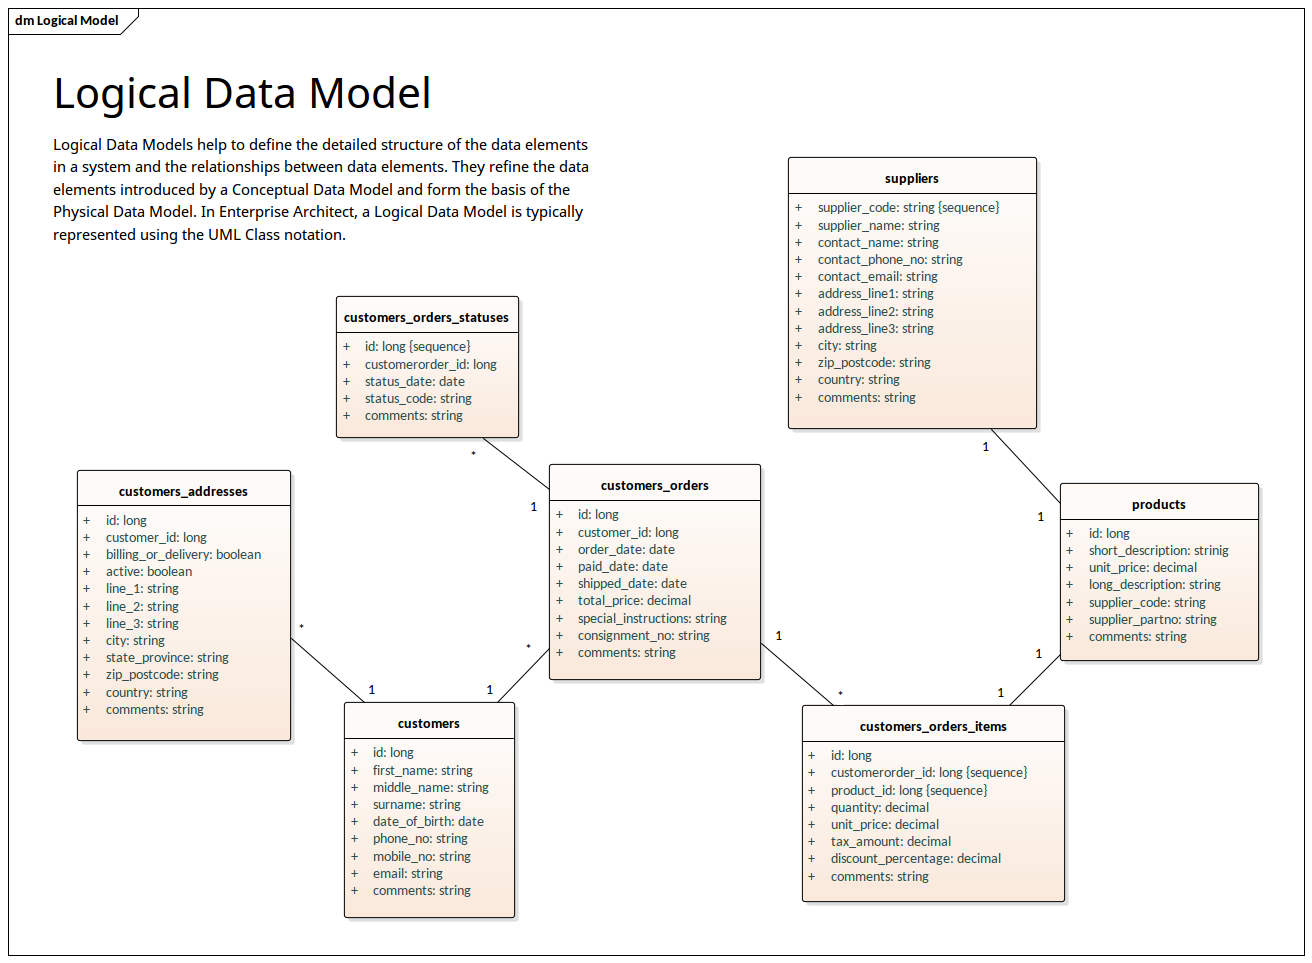 Logical Data Model - Uml Notation | Enterprise Architect within Data Model Diagram Symbols